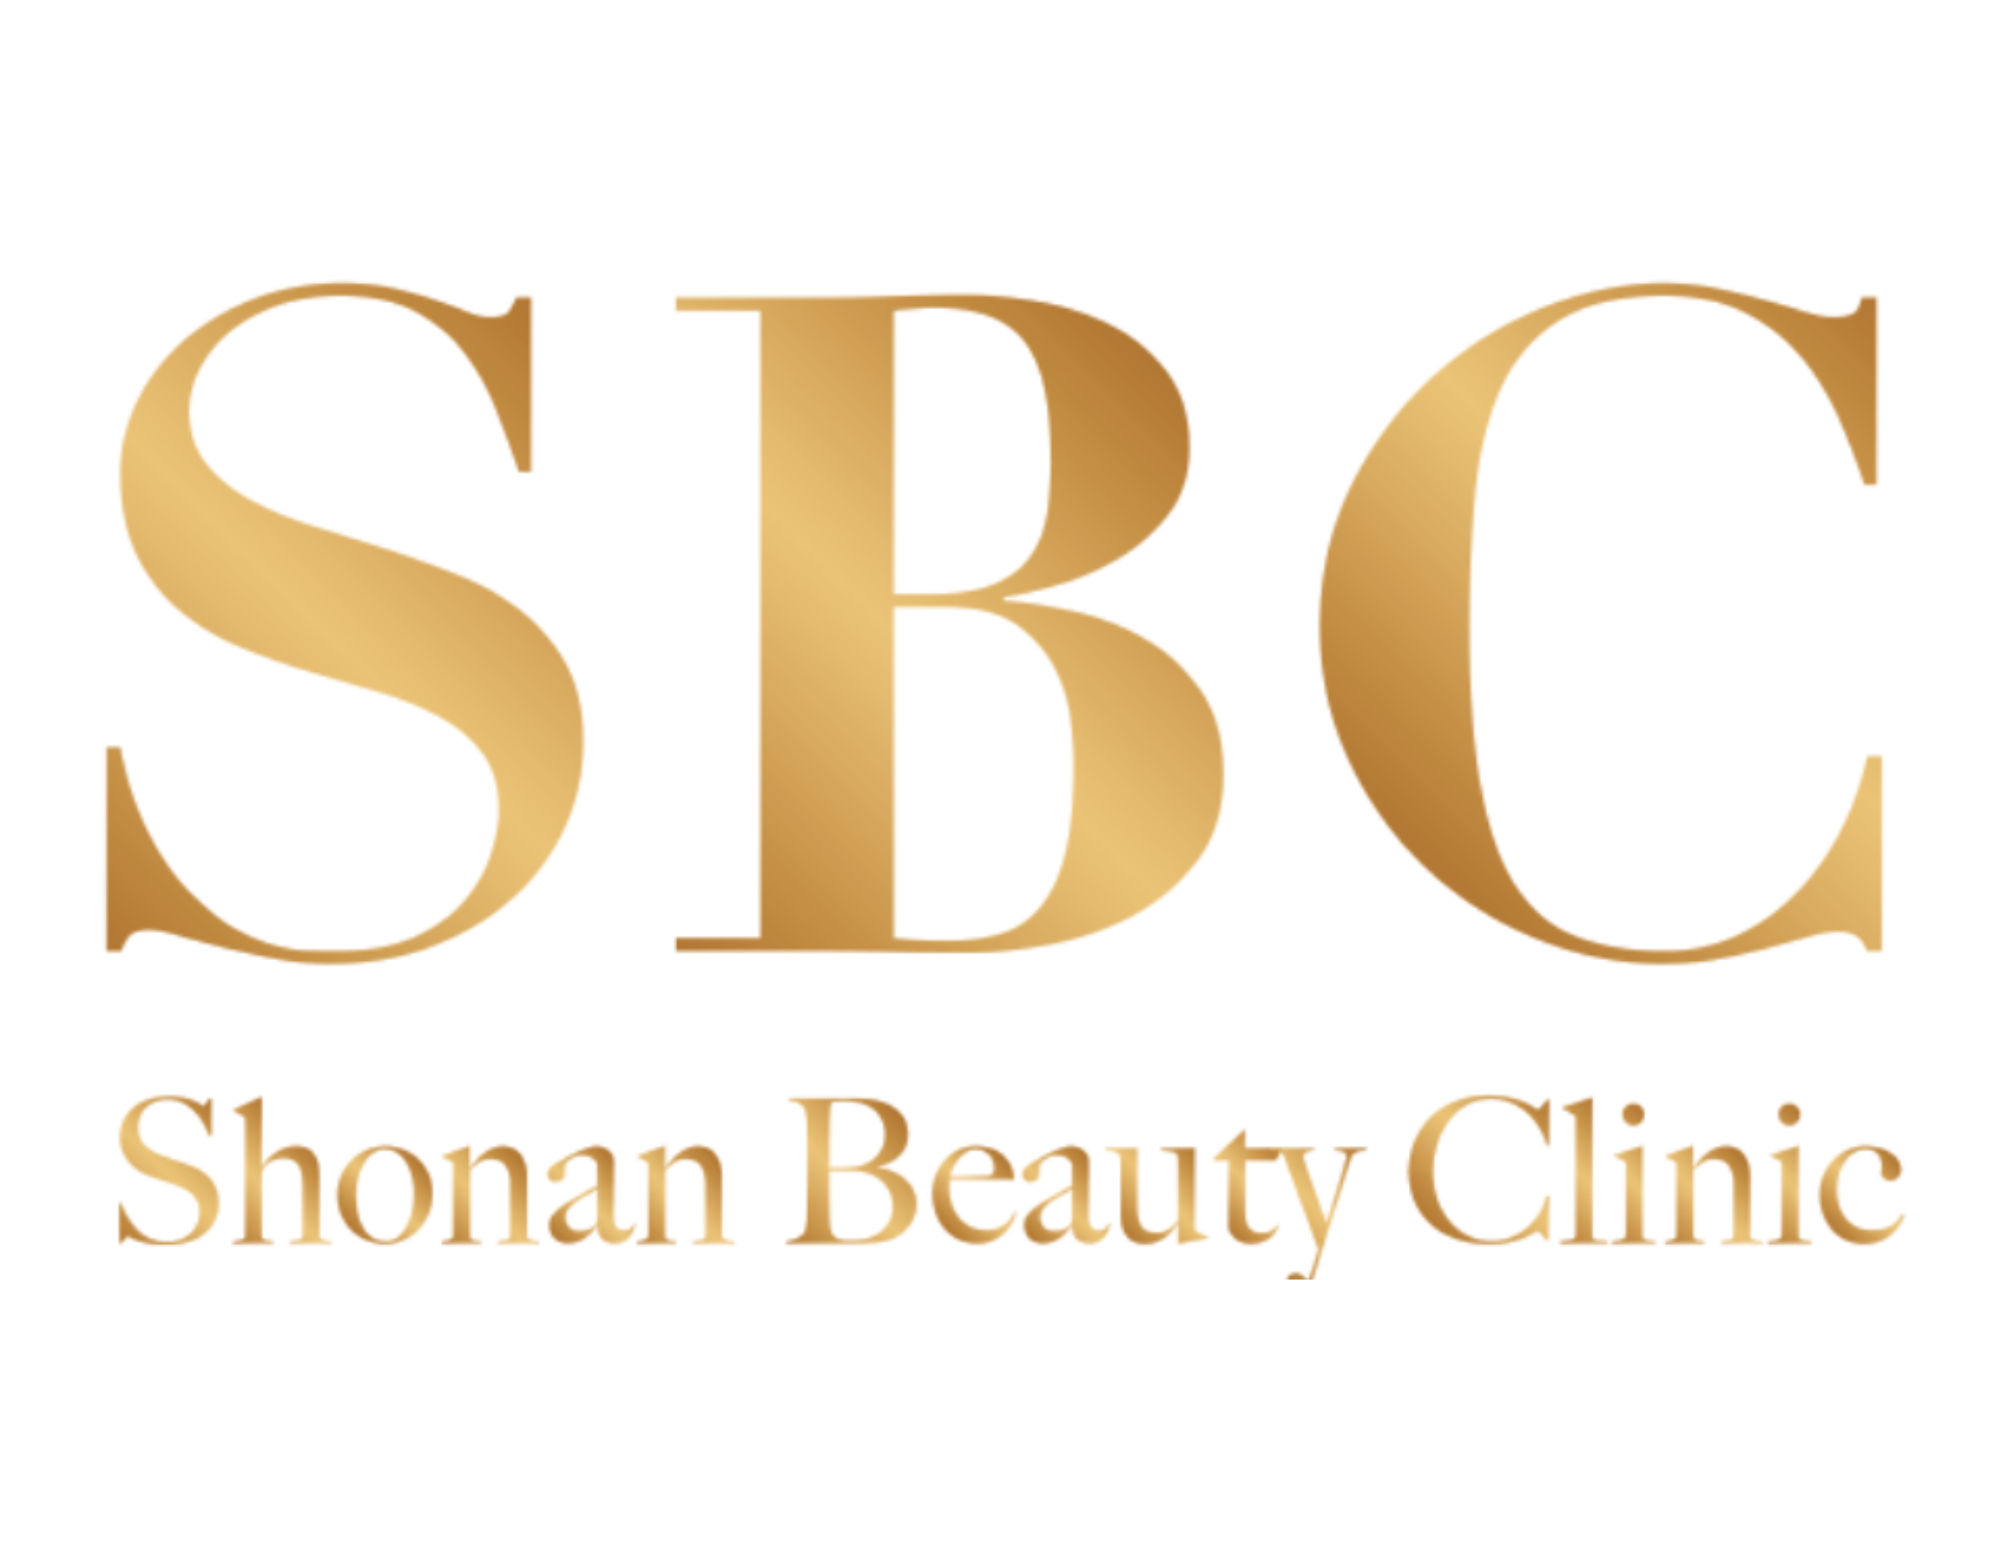 Shonan Beauty Clinic logo